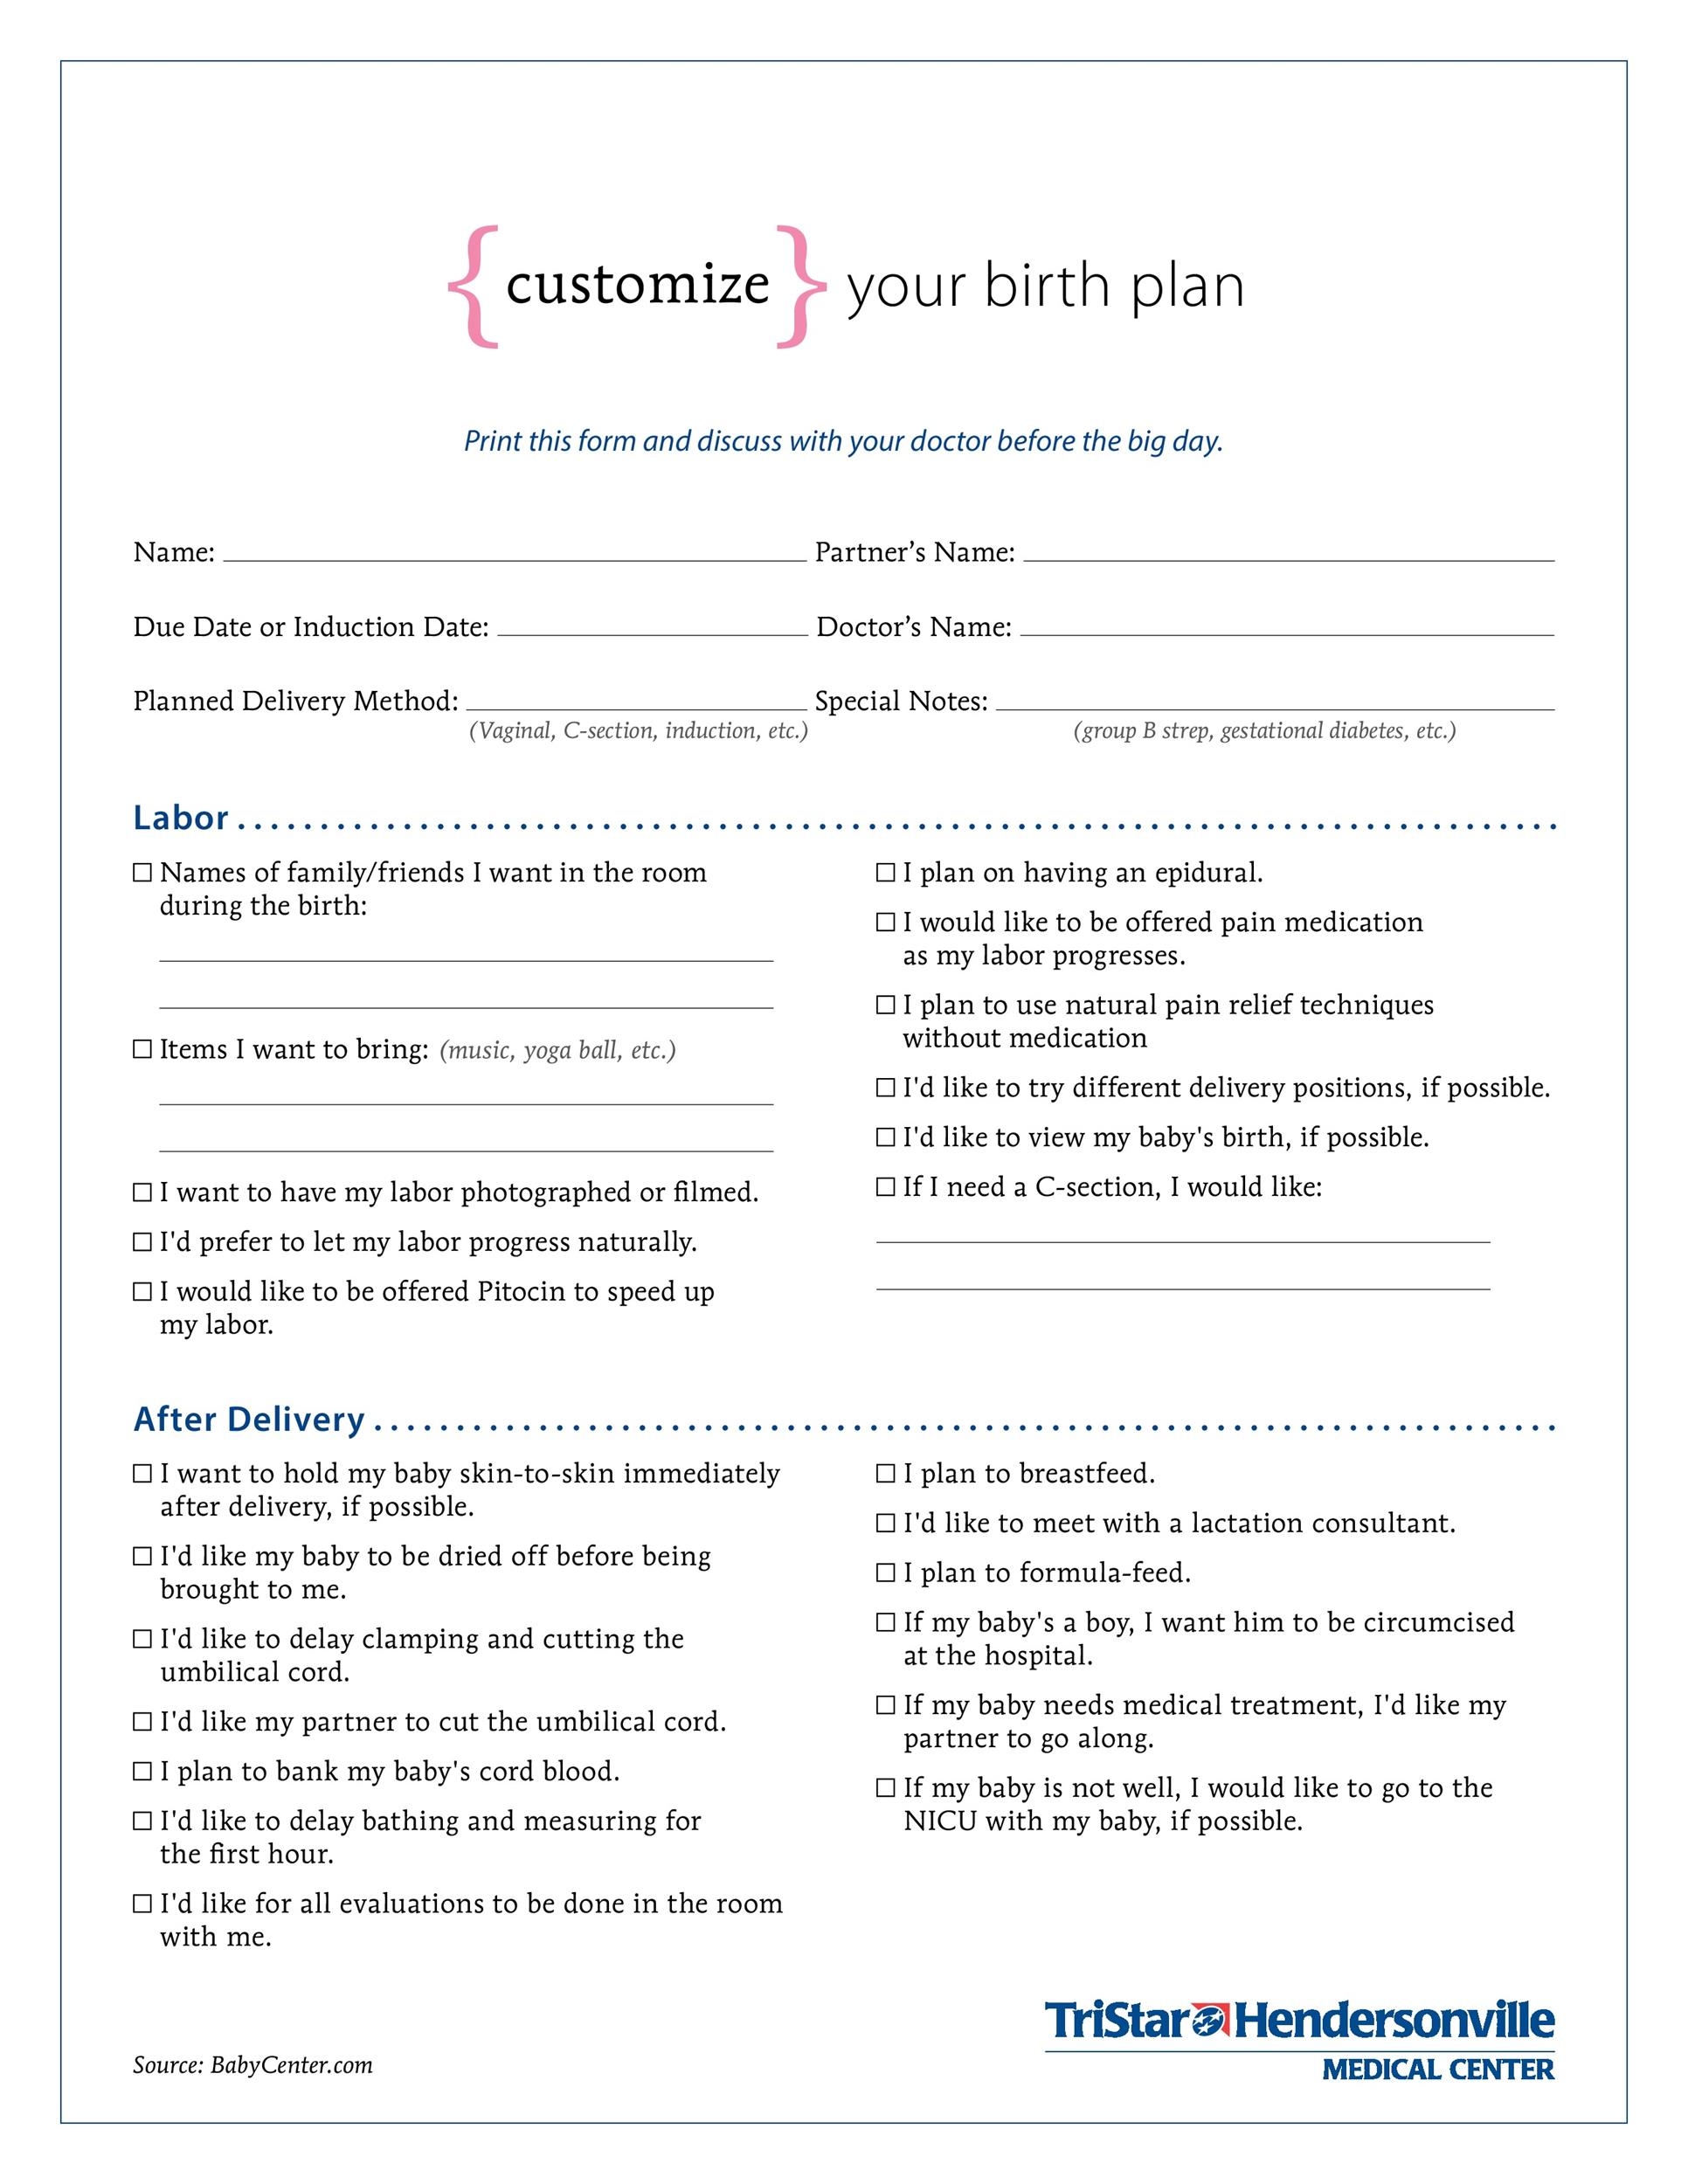 50 Birth Plan Examples | RedlineSP